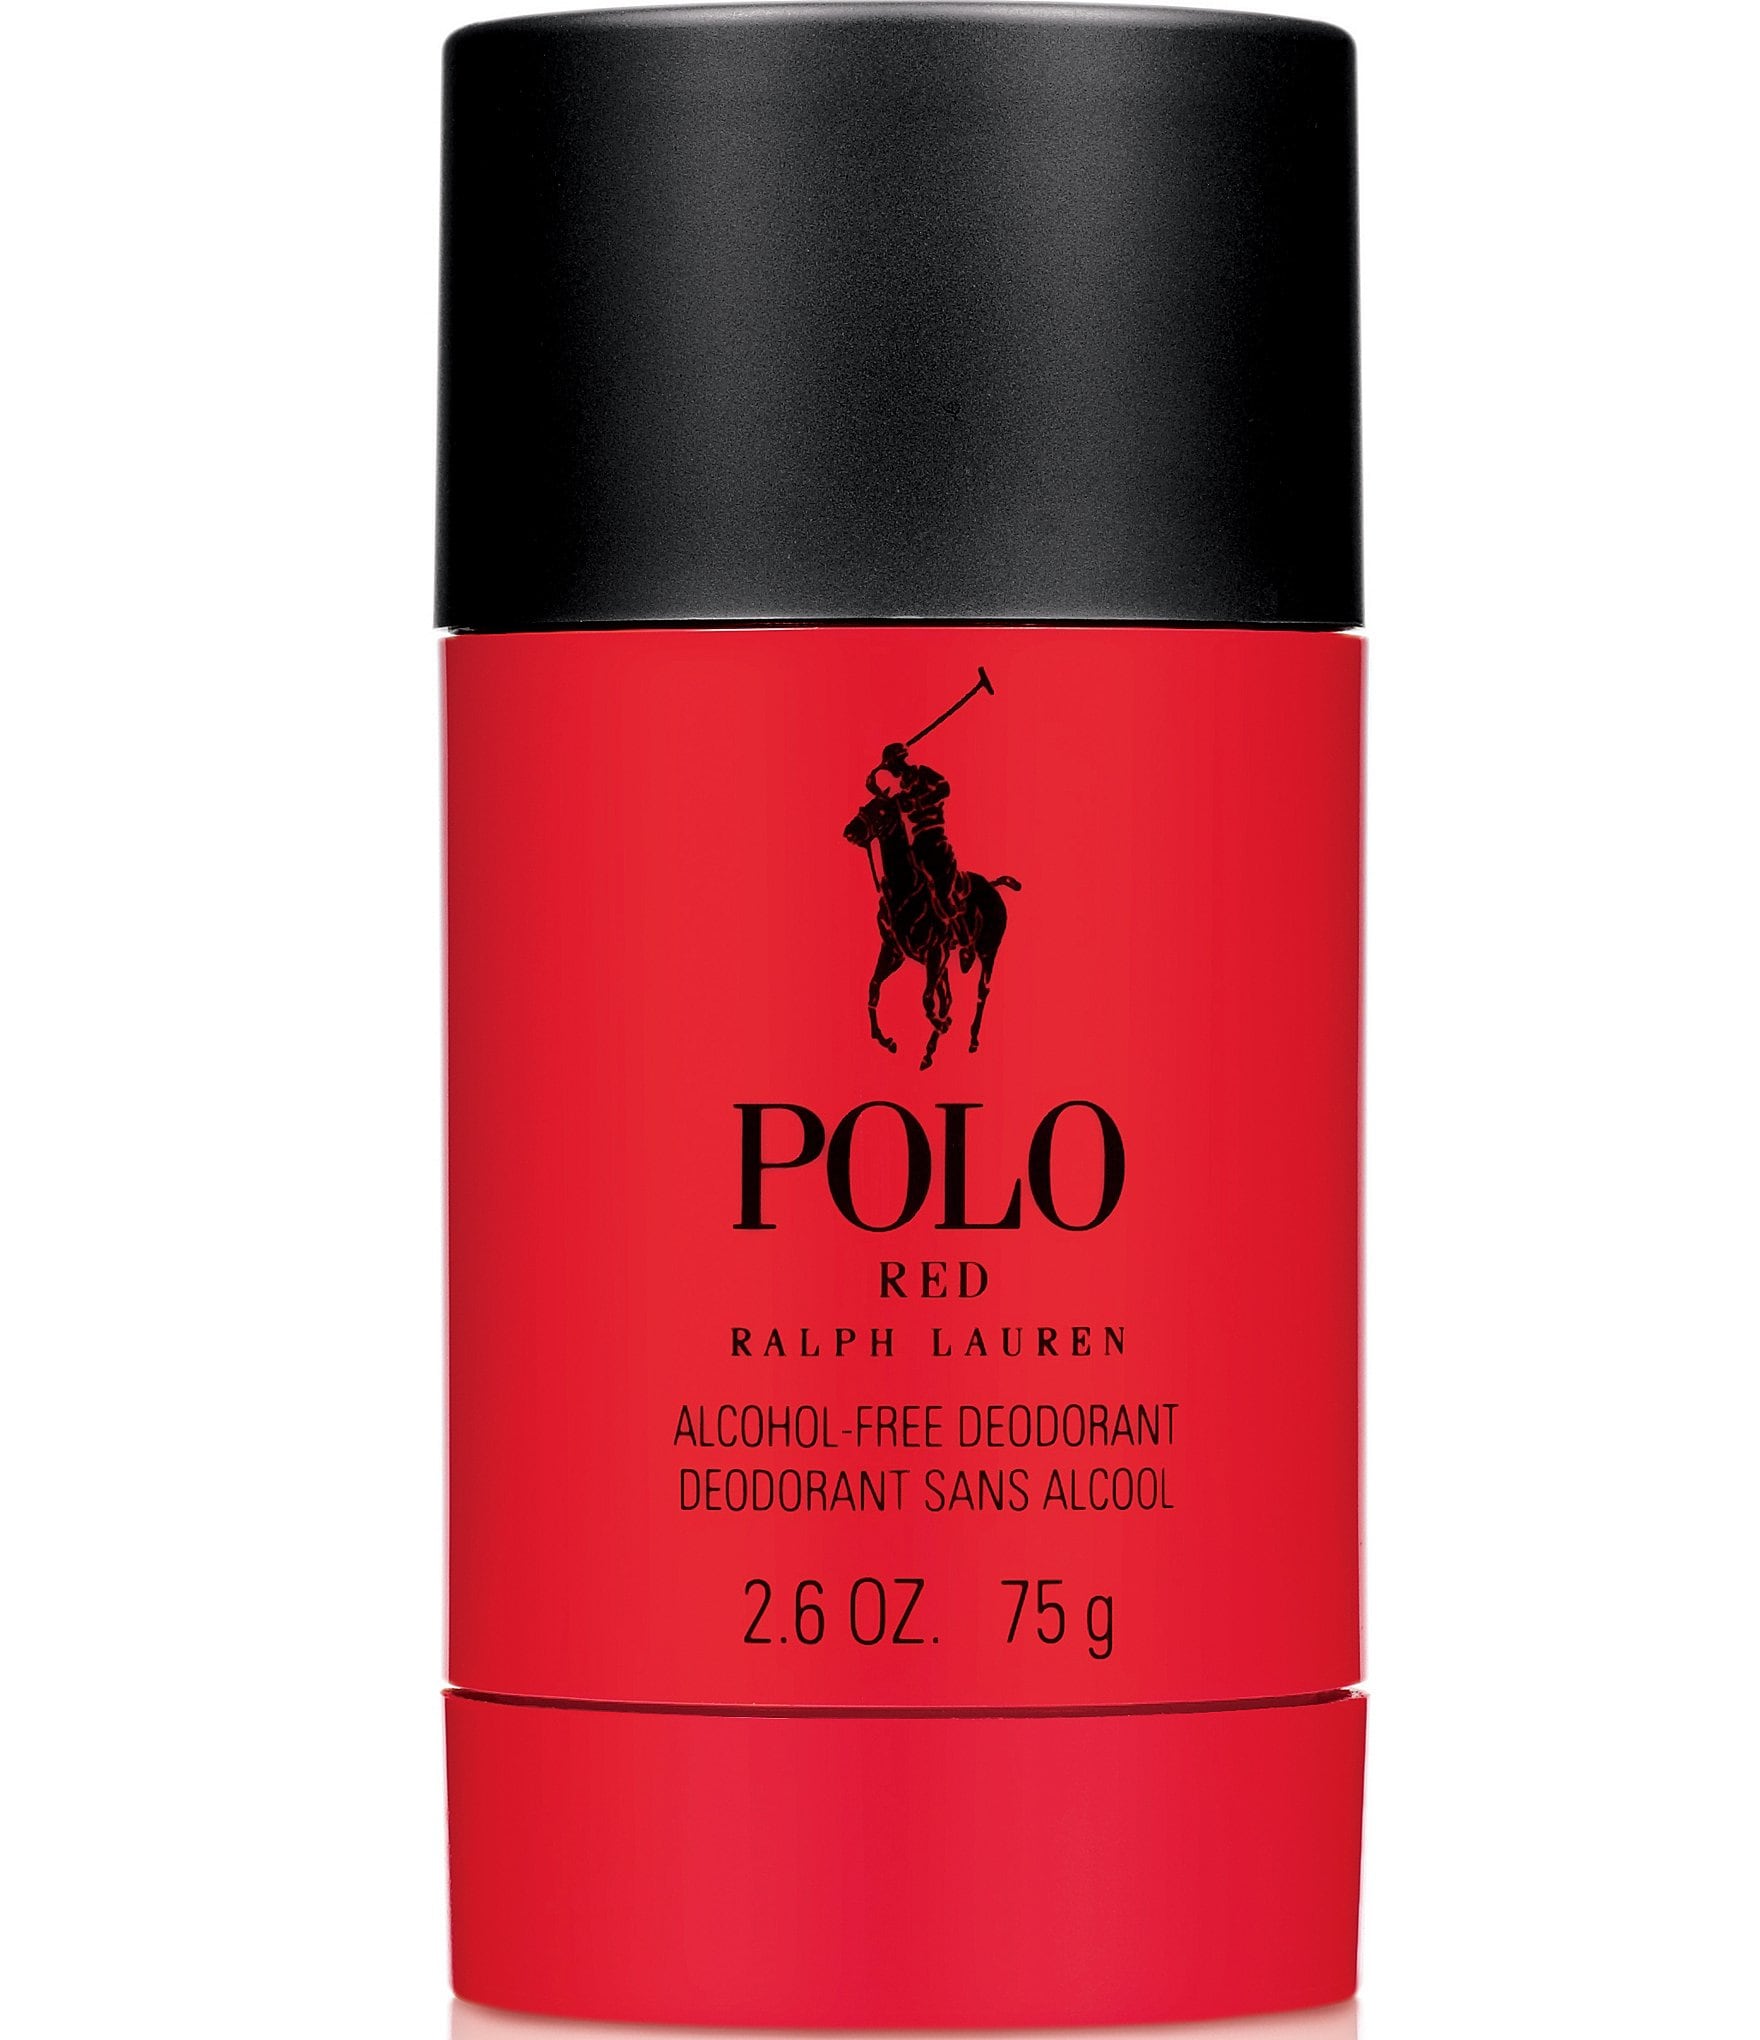 polo deodorizing body spray